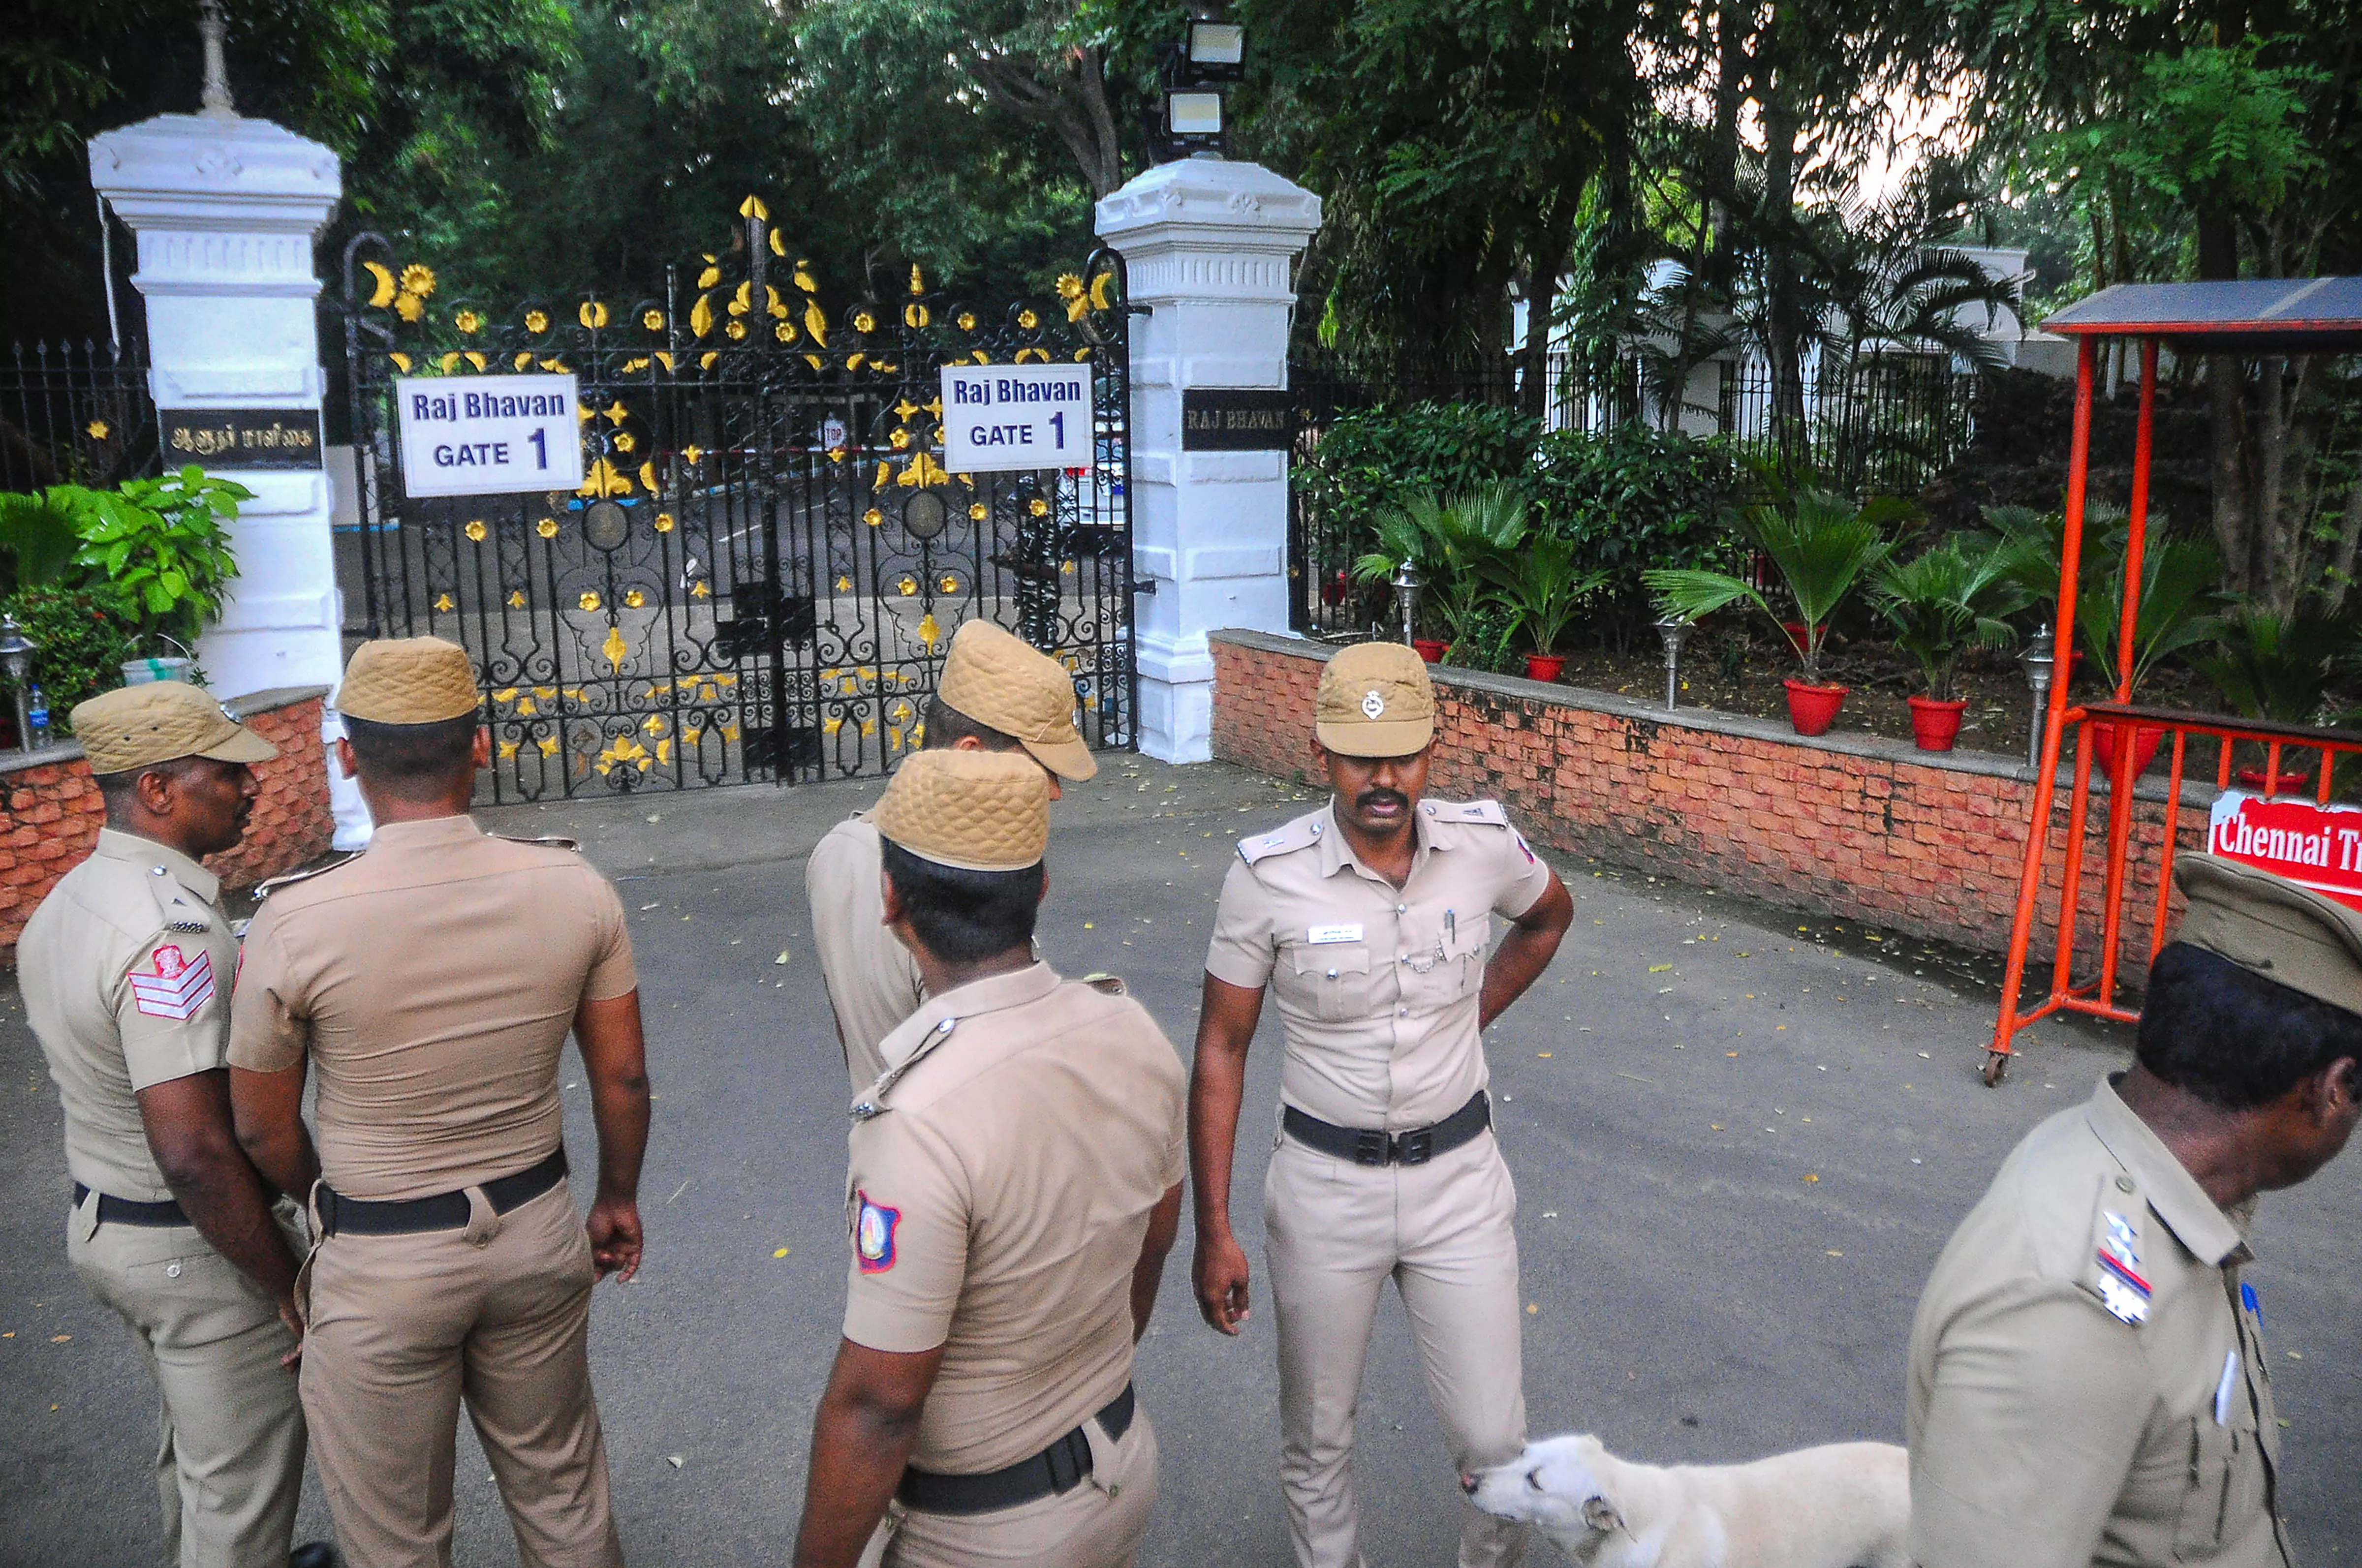 Tamil Nadu: NIA files chargesheet against man who hurled bombs at Raj Bhavan